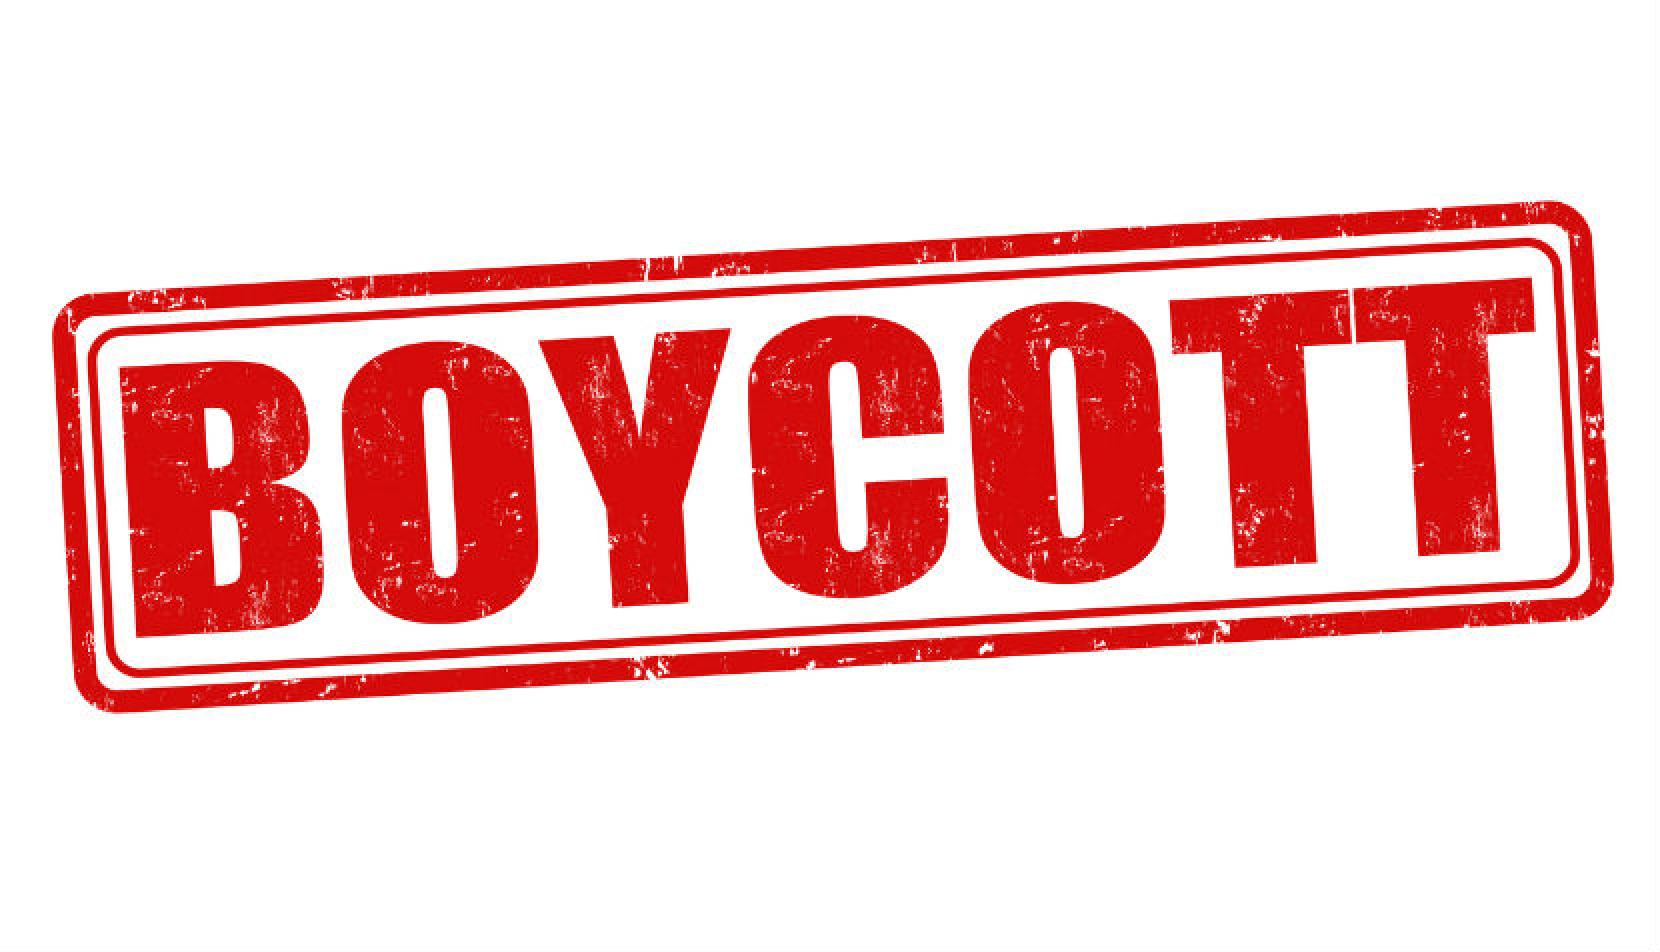 https://news.utexas.edu/wp-content/uploads/2017/05/boycott_sign.jpg